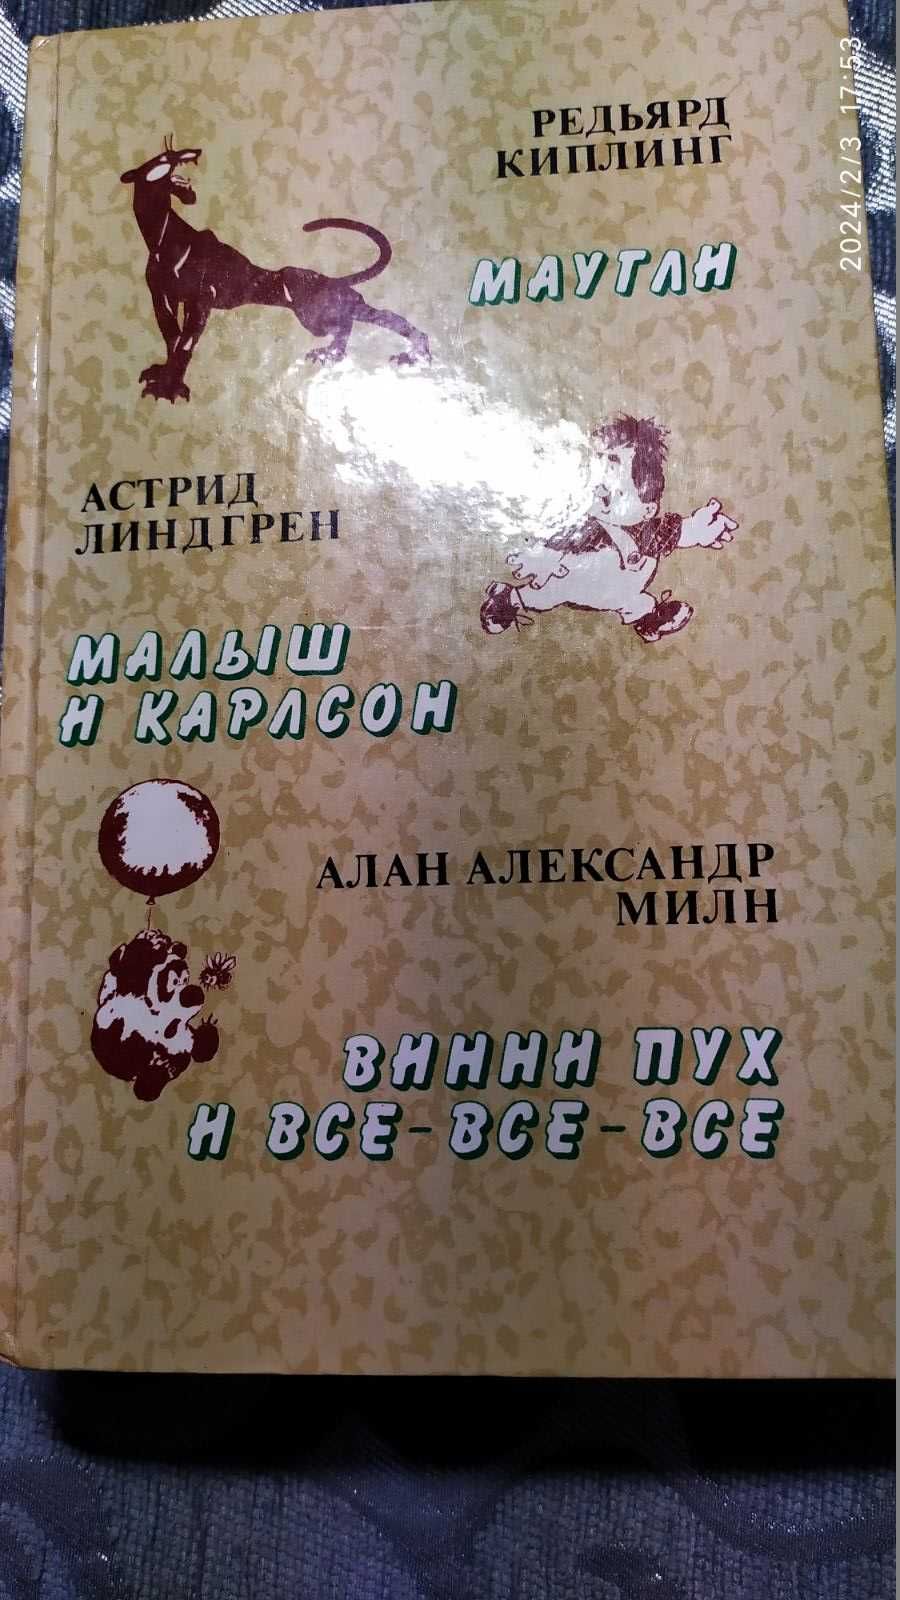 Книга Сказки Маугли,Малыш и Карлсон,Винни пух и все-все-все, 1985г